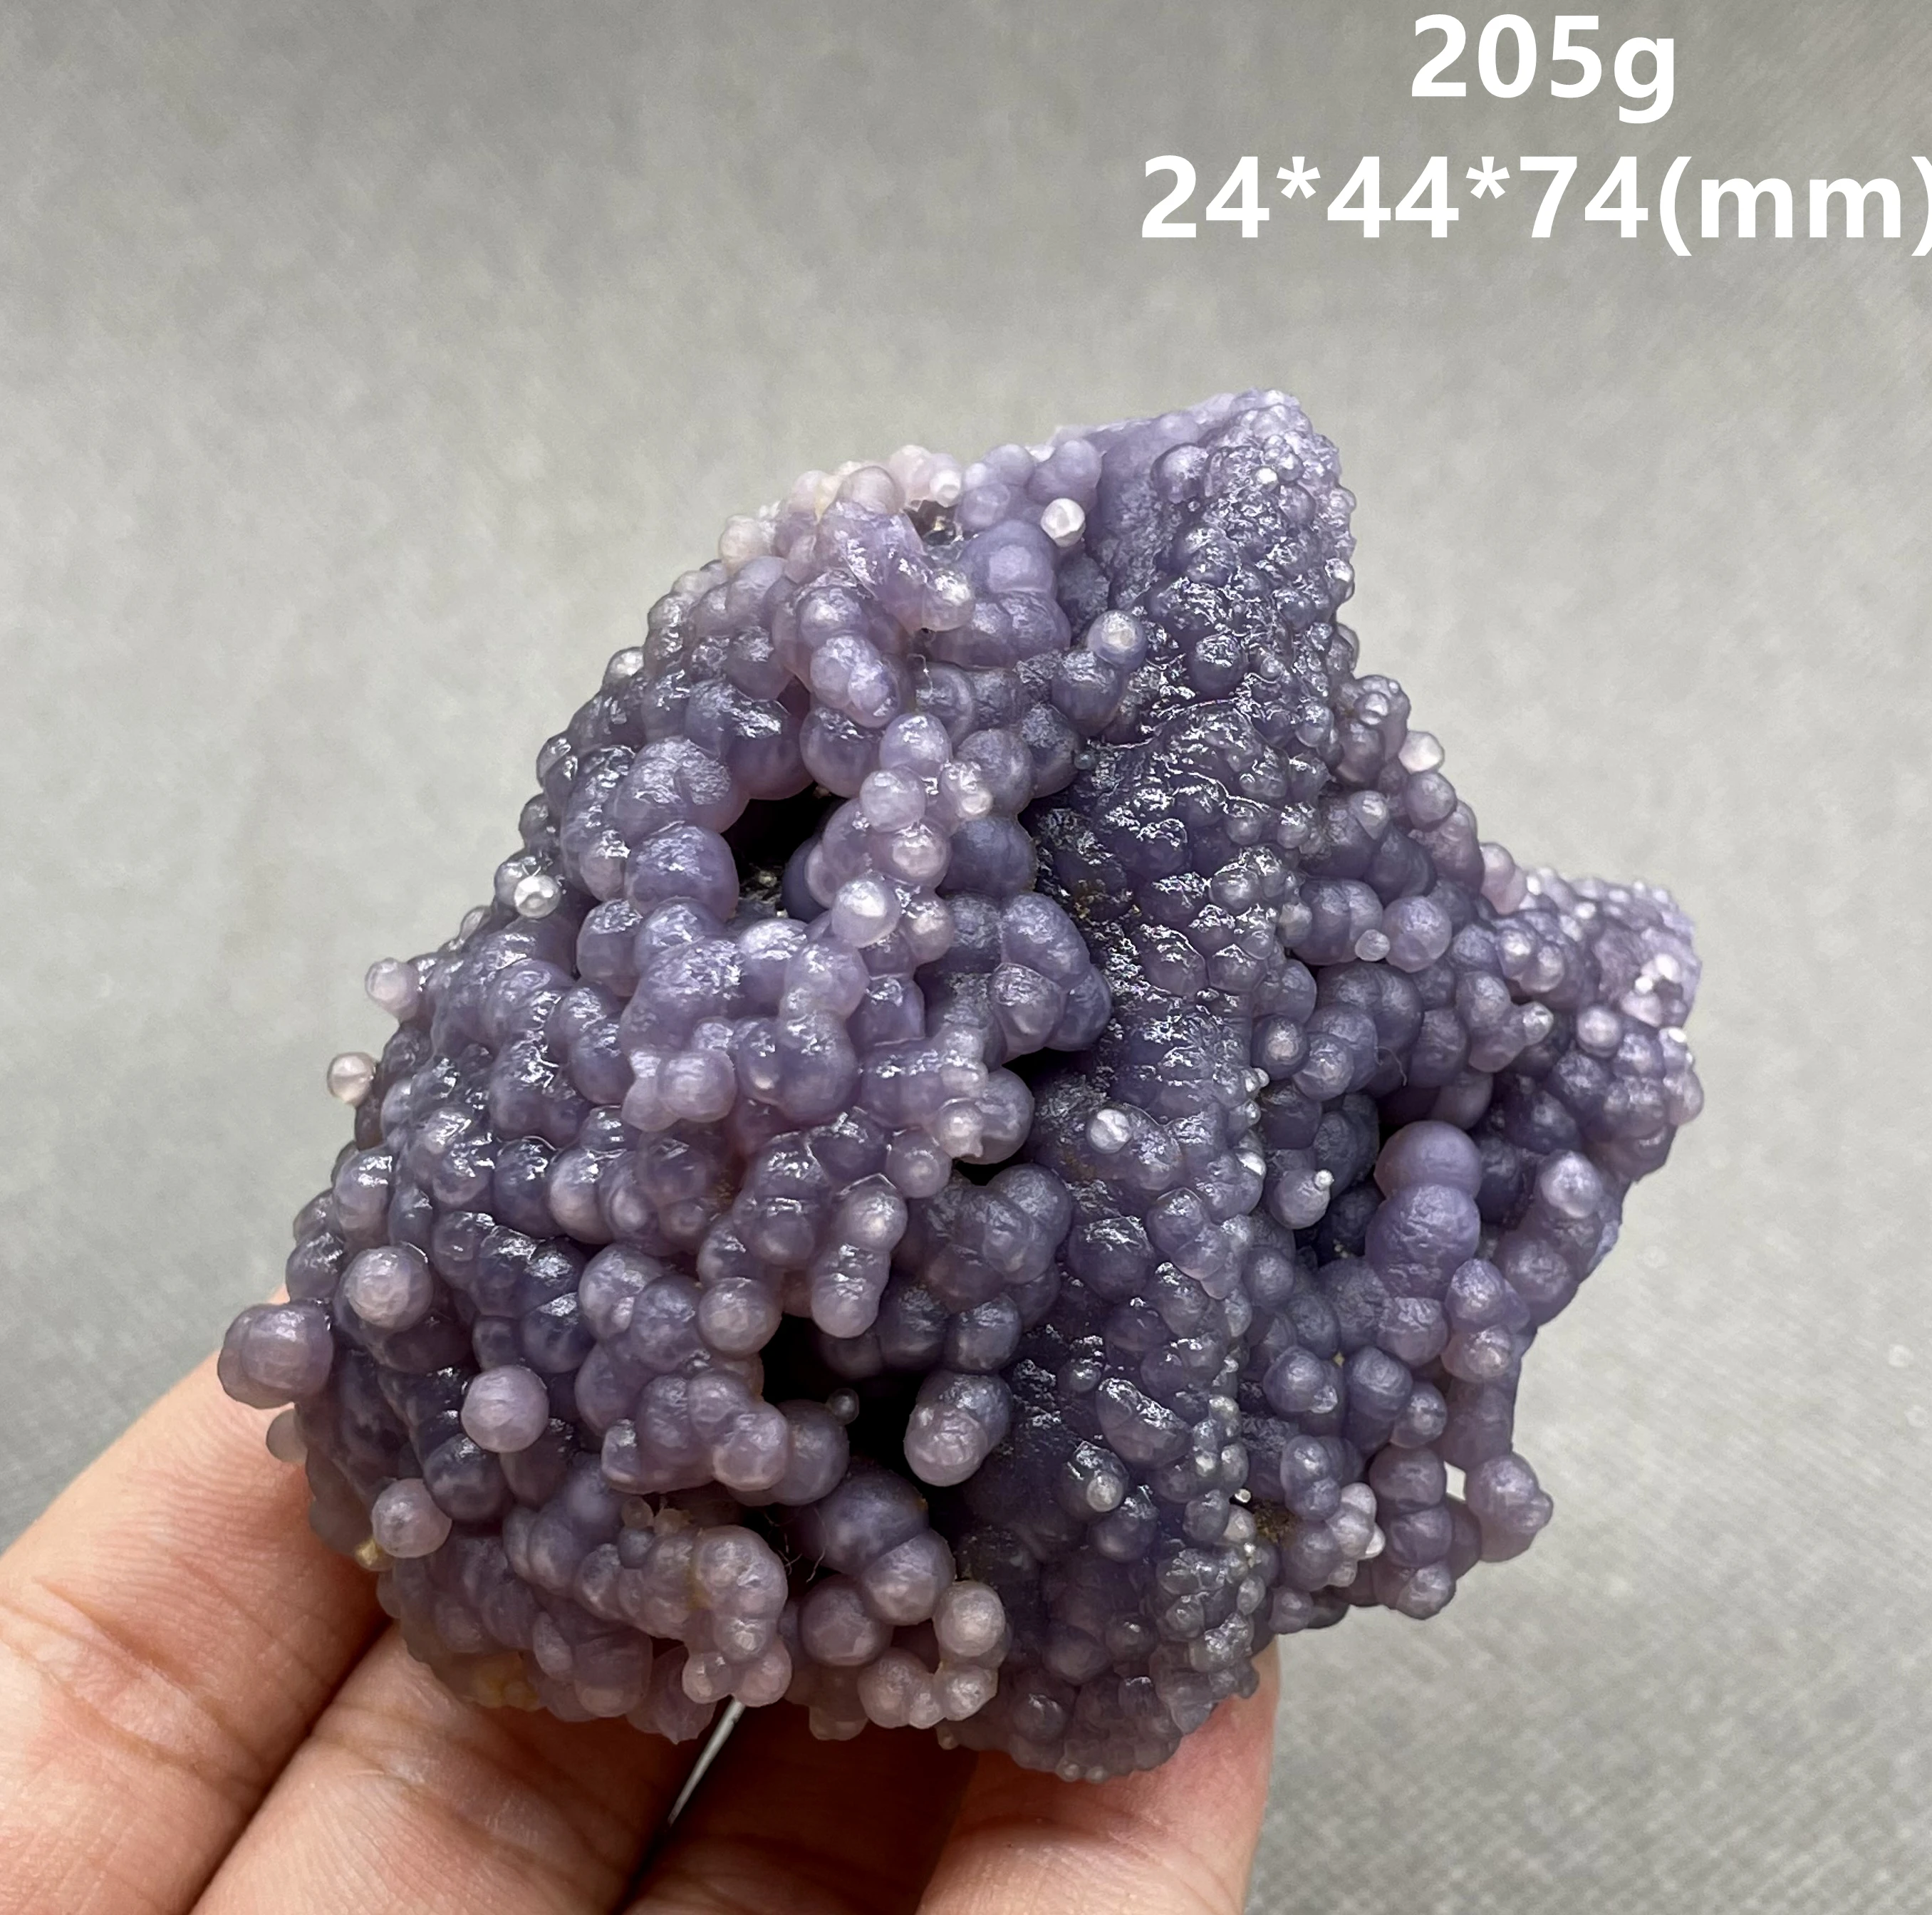 

NEW! 100% natural grape agate mineral specimen stones and crystals healing crystals quartz gemstones